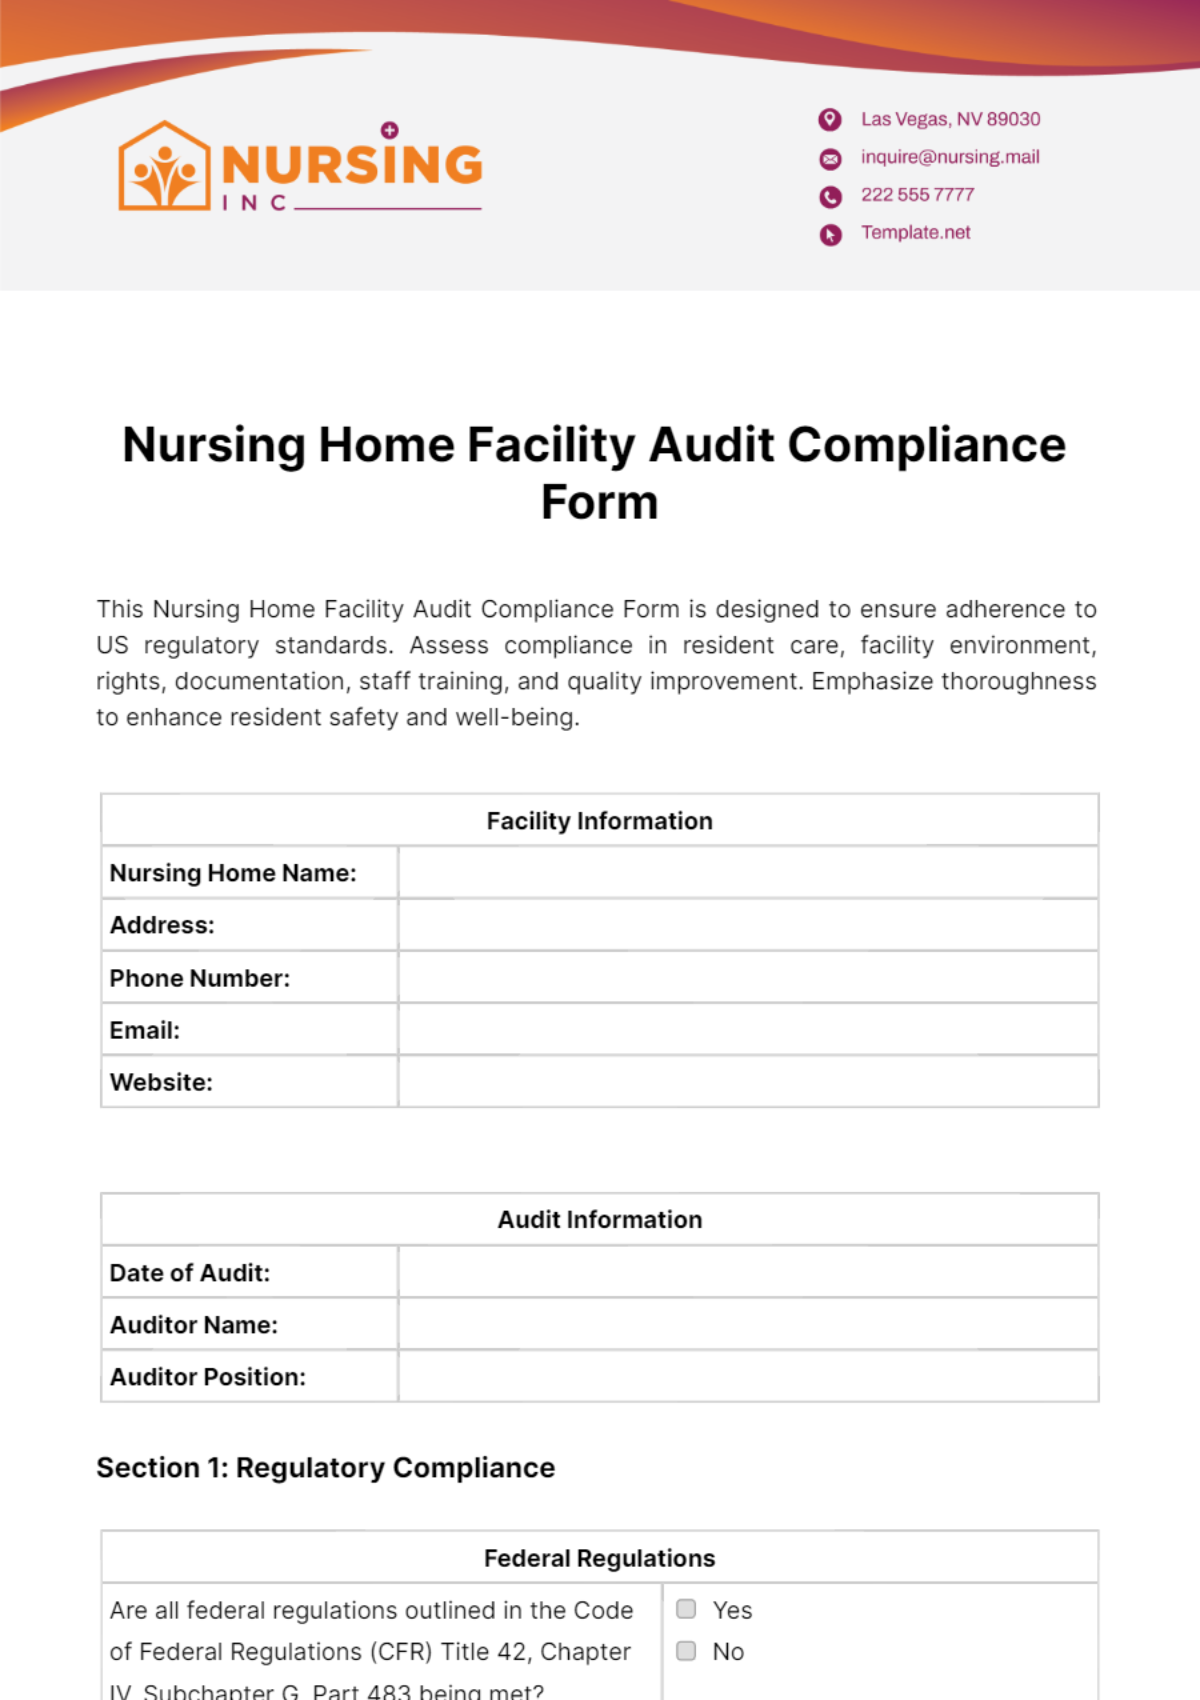 Nursing Home Facility Audit Compliance Form Template